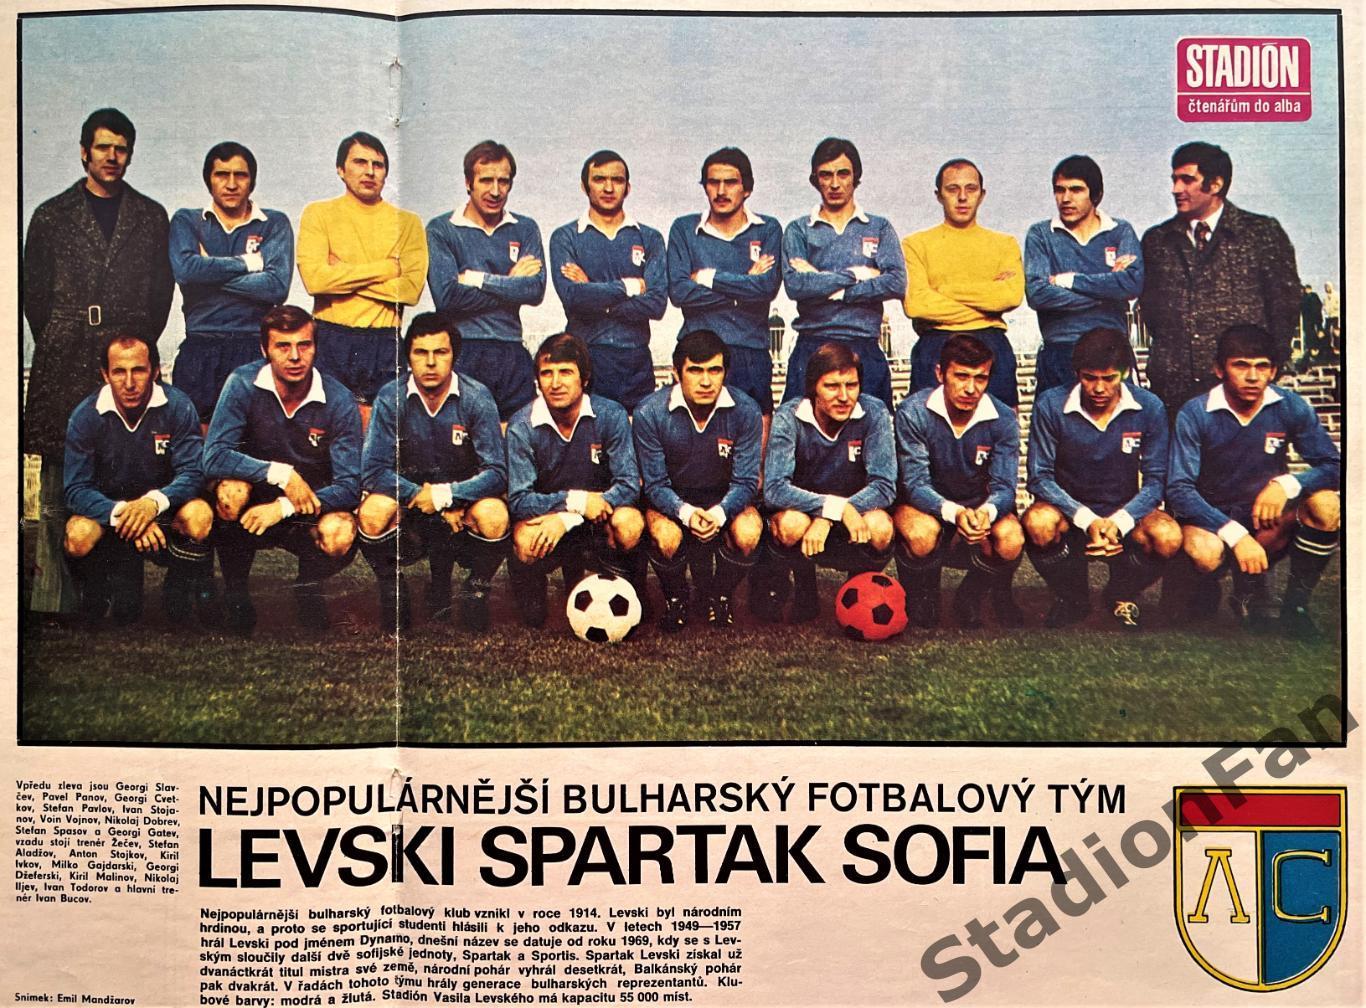 Постер из журнала Стадион (Stadion) - Levski Spartak Sofia, 1976.